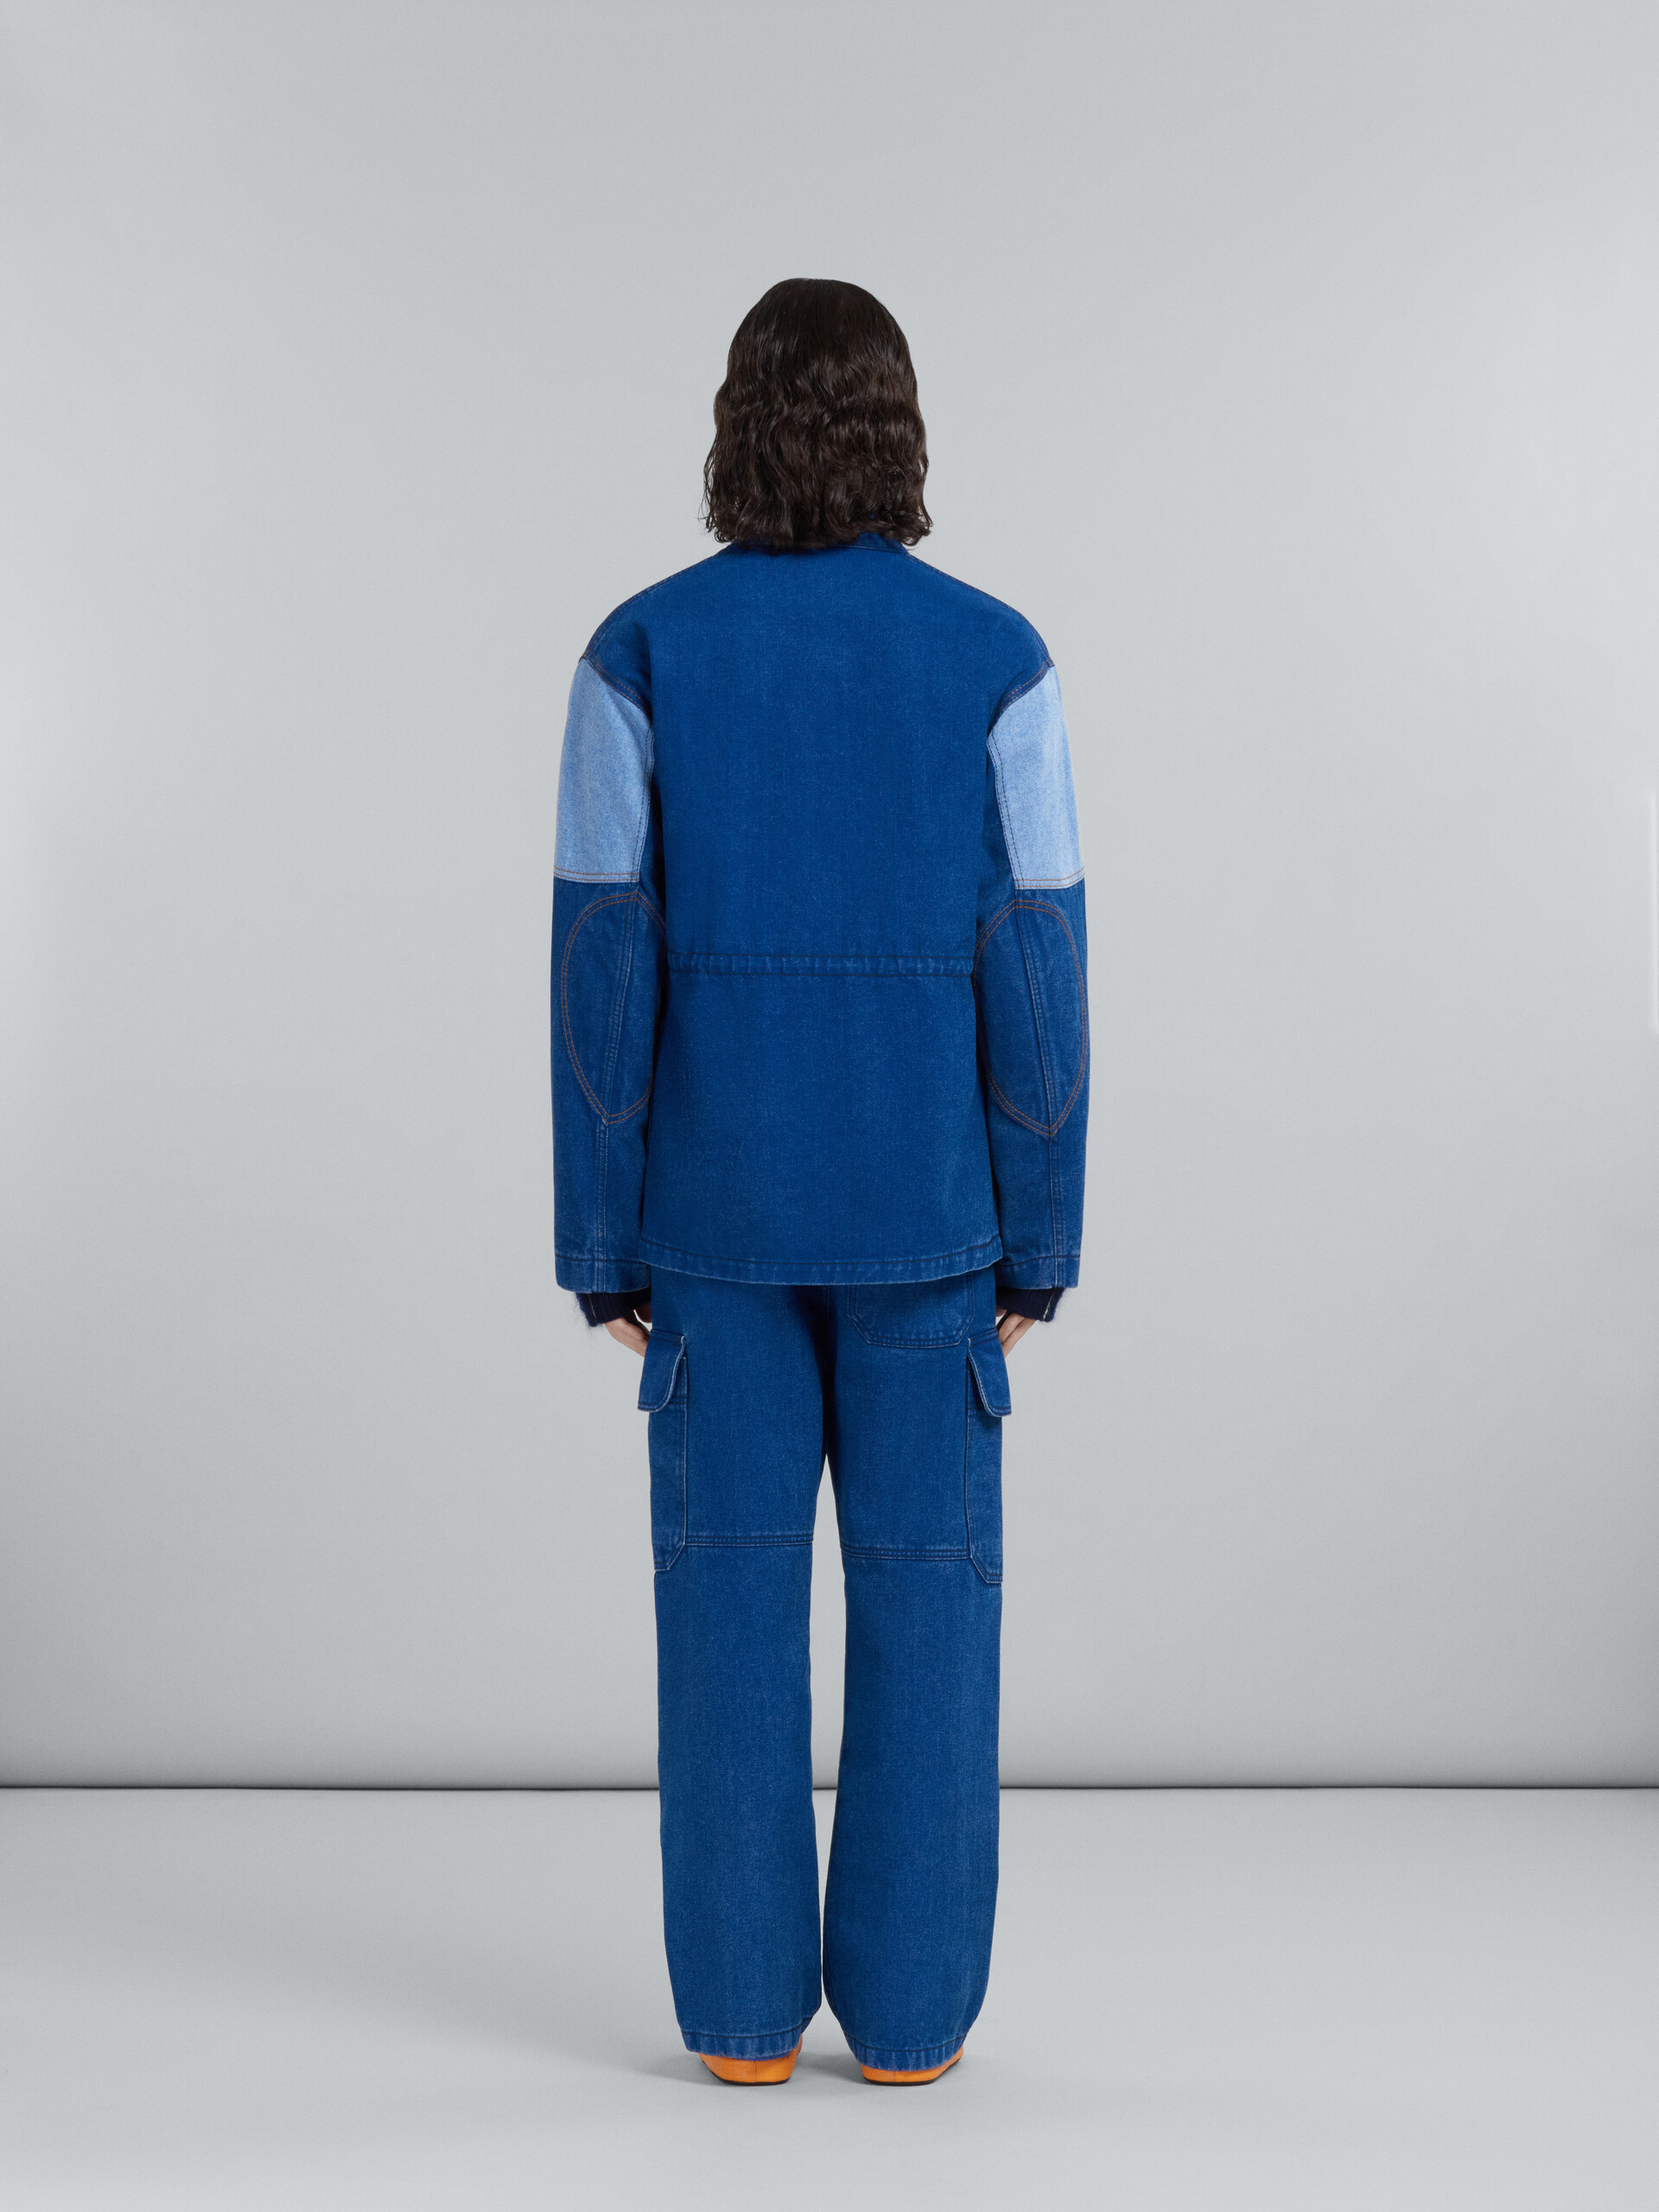 Beschichtete, blaue Jeansjacke - Jacken - Image 3